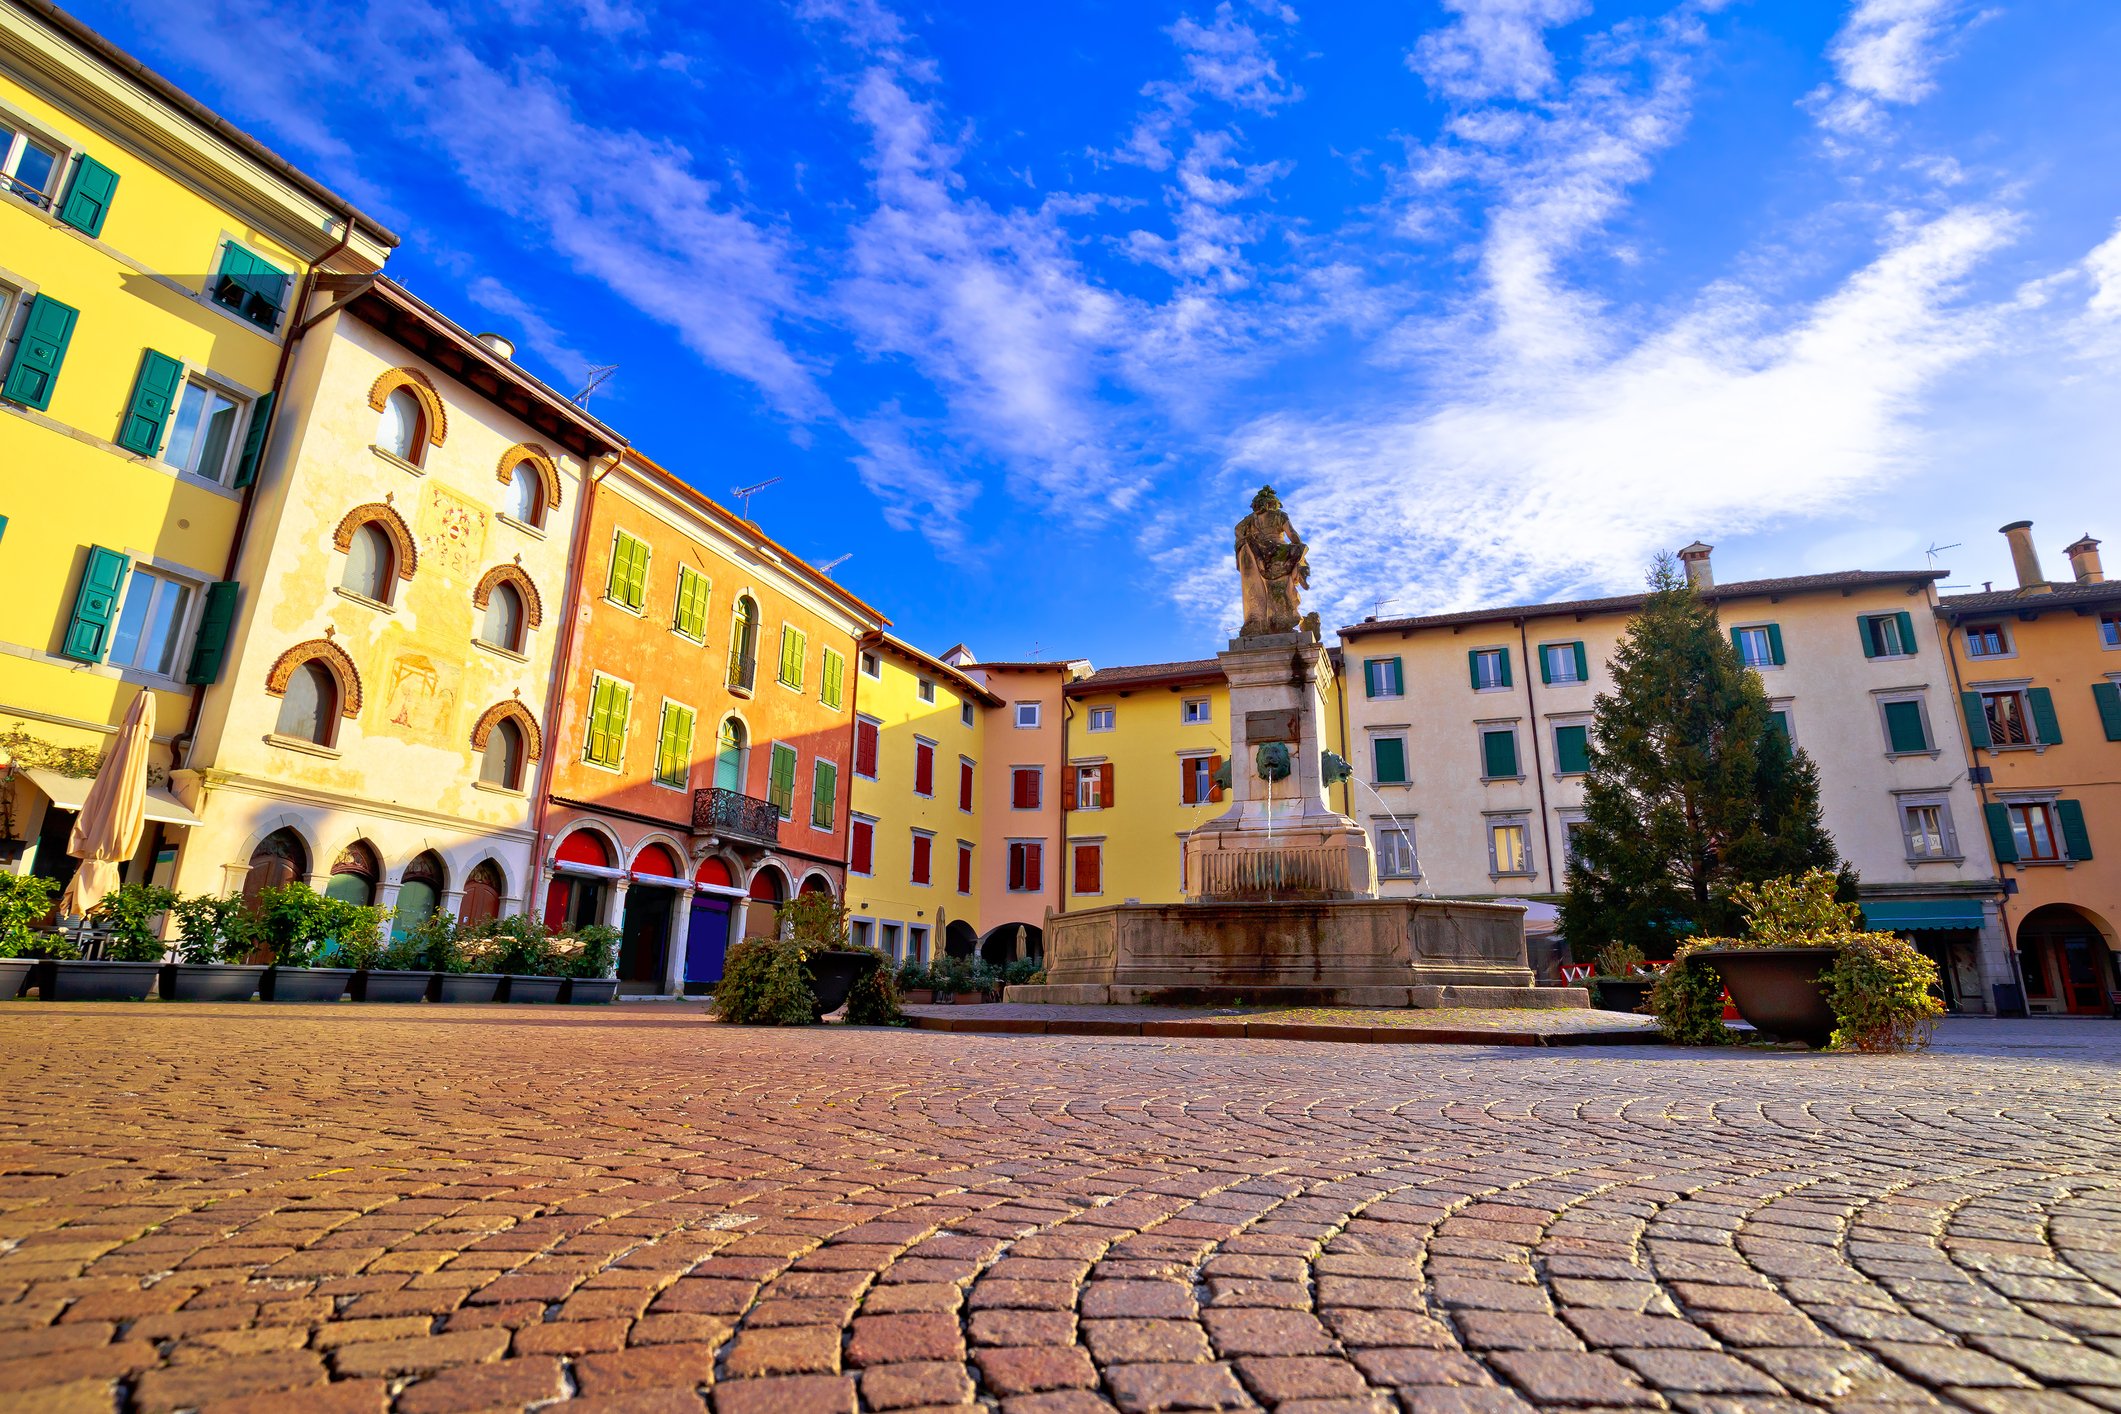 dreamstime_m_115629917 Town of Cividale del Friuli by Xbrchx.jpg